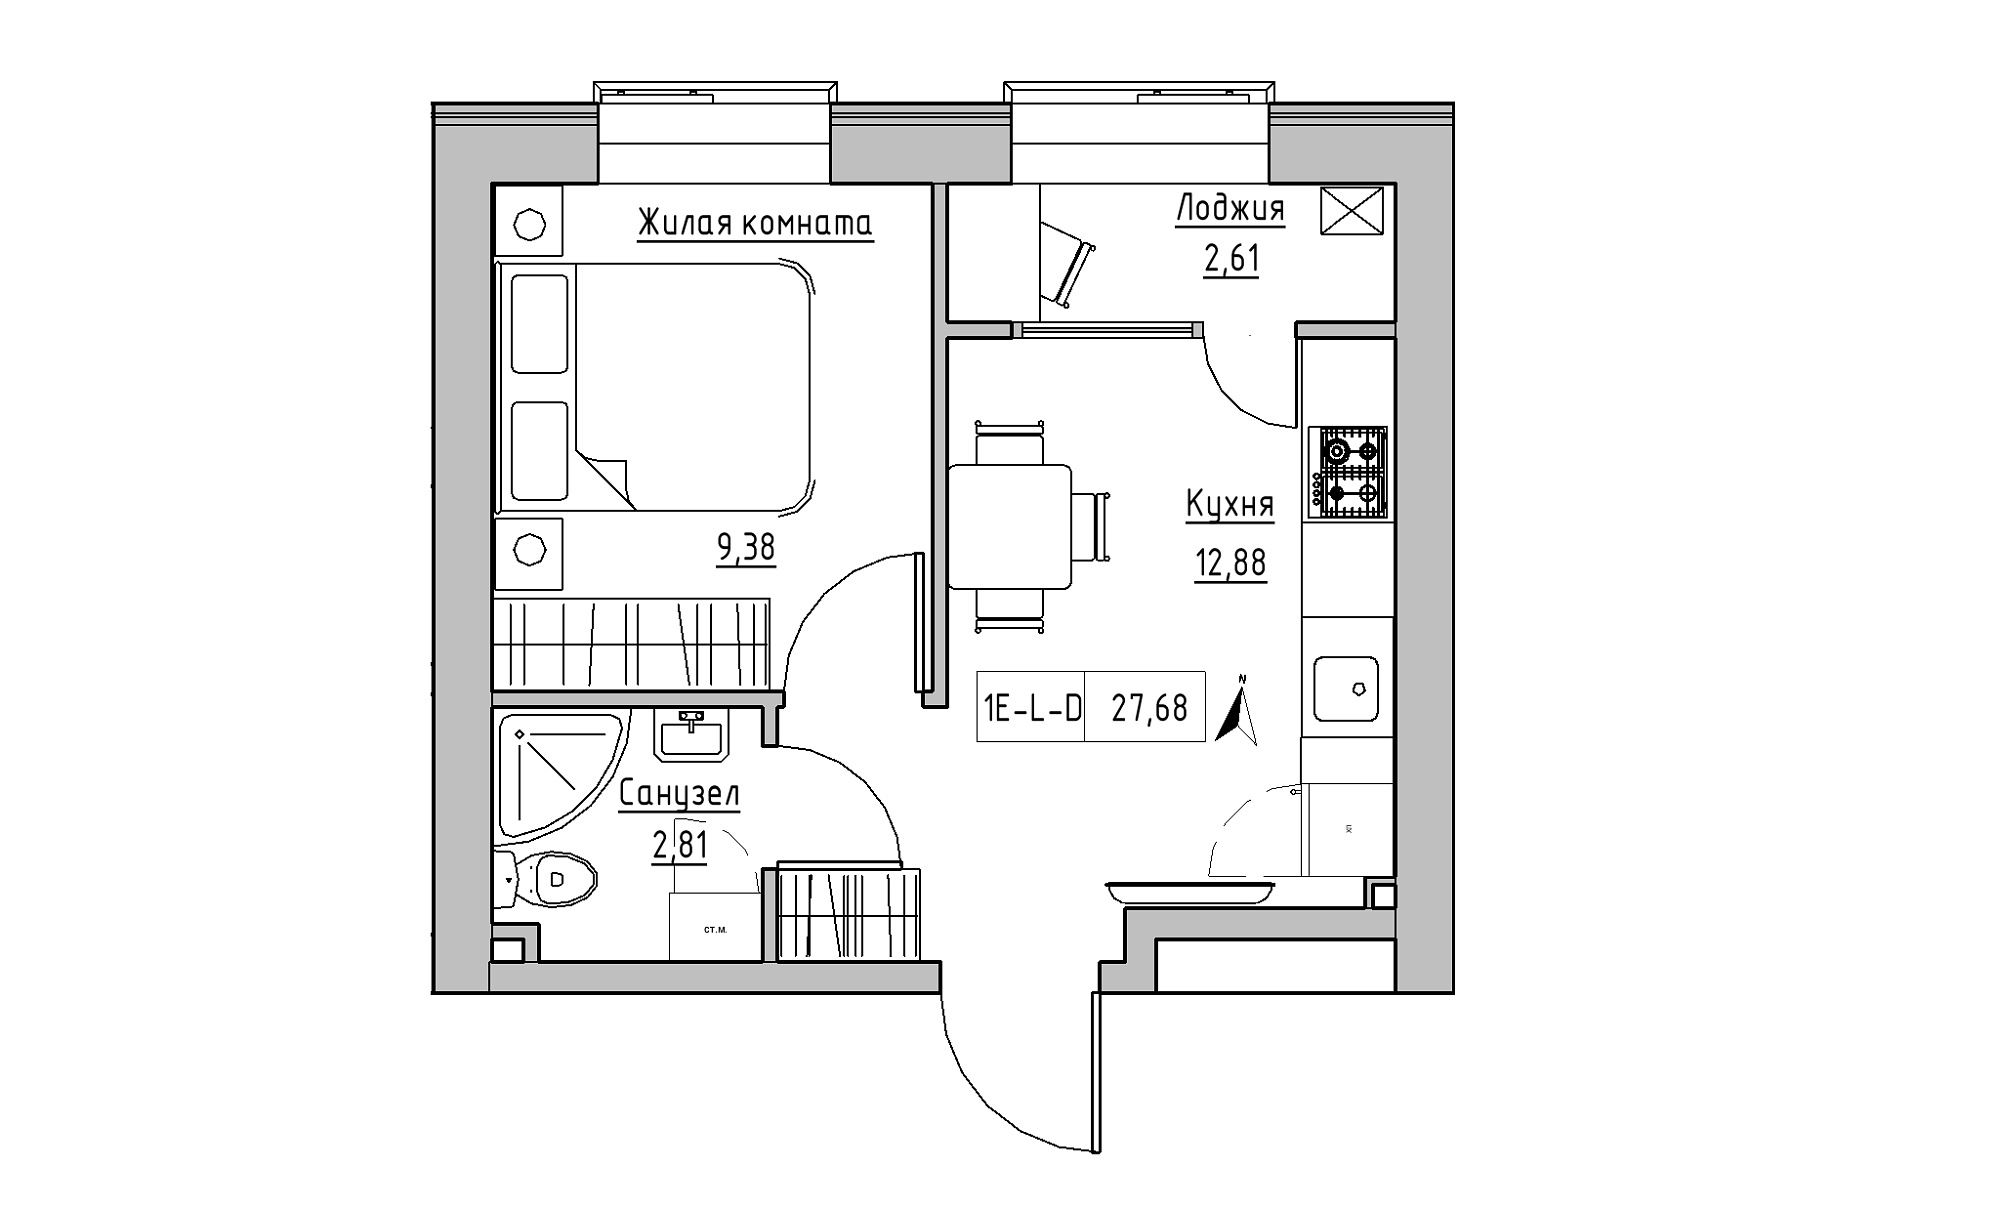 Planning 1-rm flats area 27.68m2, KS-016-03/0001.